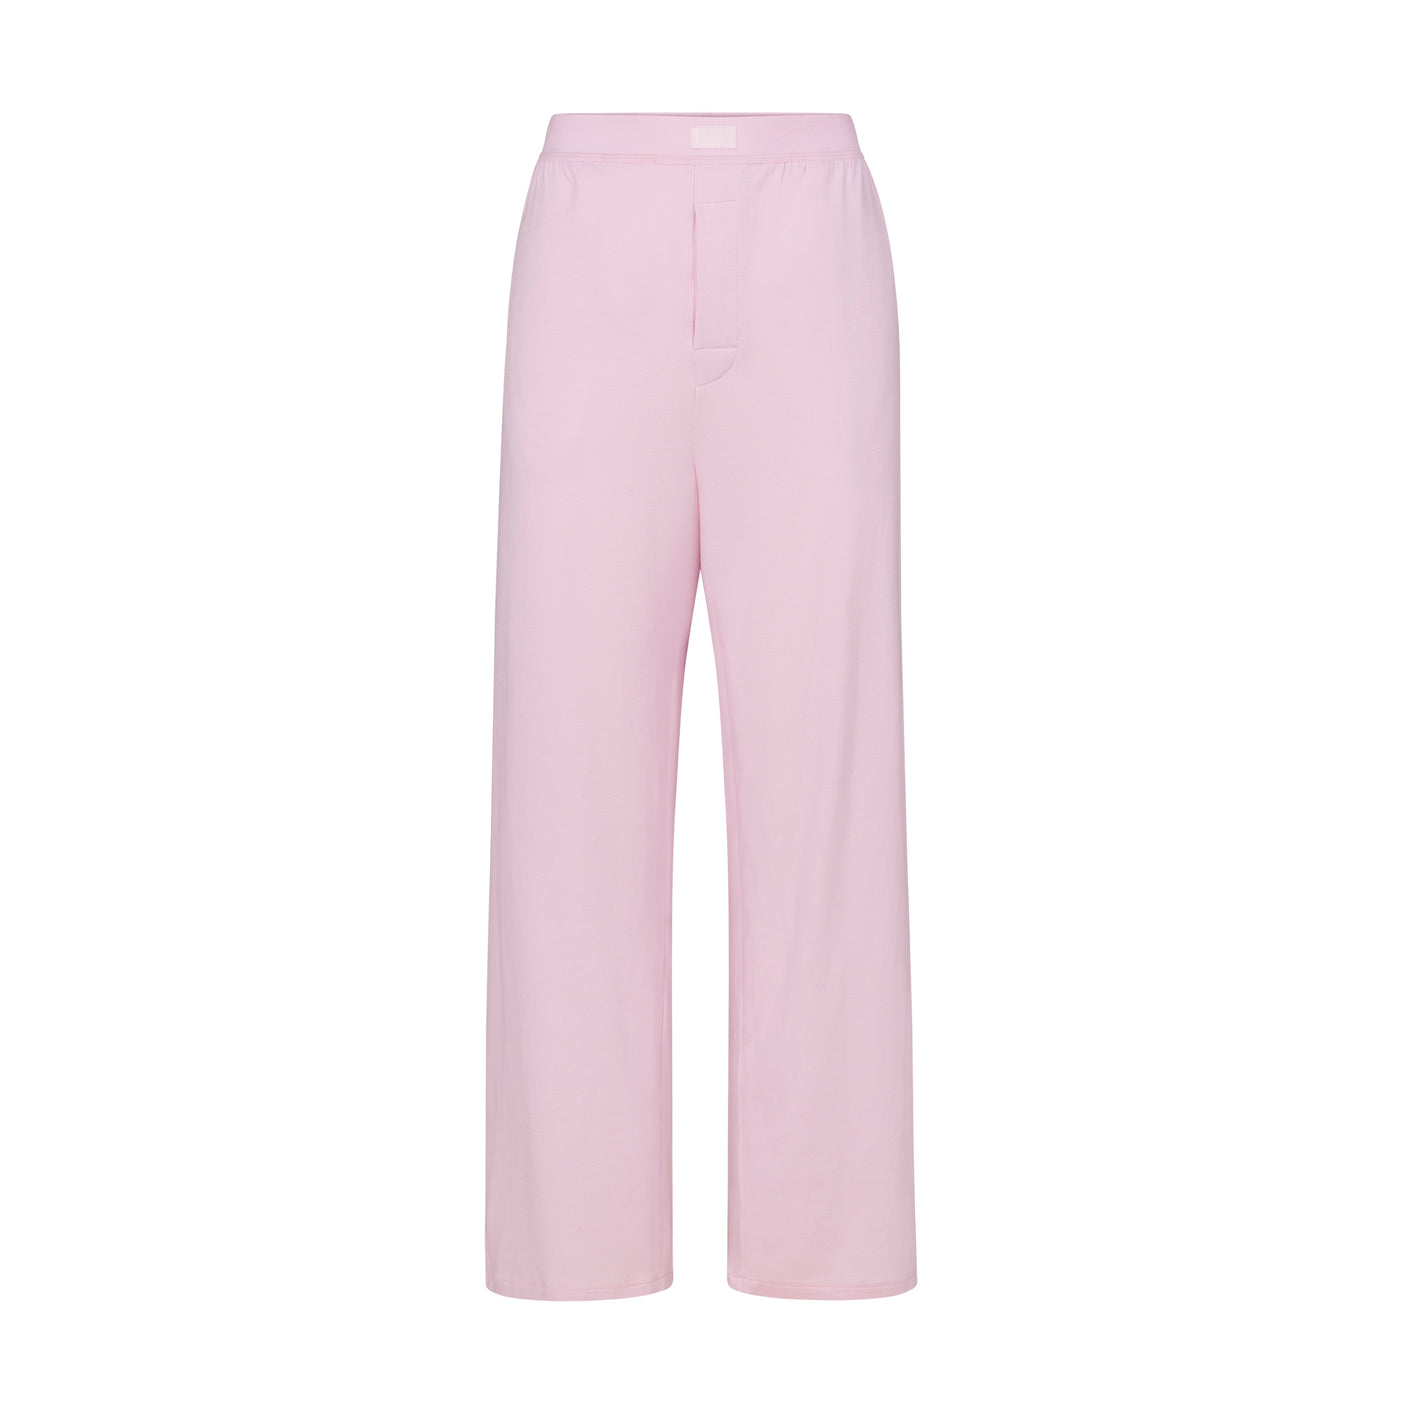 SKIMS, Pants & Jumpsuits, Skims 4x Hot Pink Lounge Sleep Pants Bottoms  New